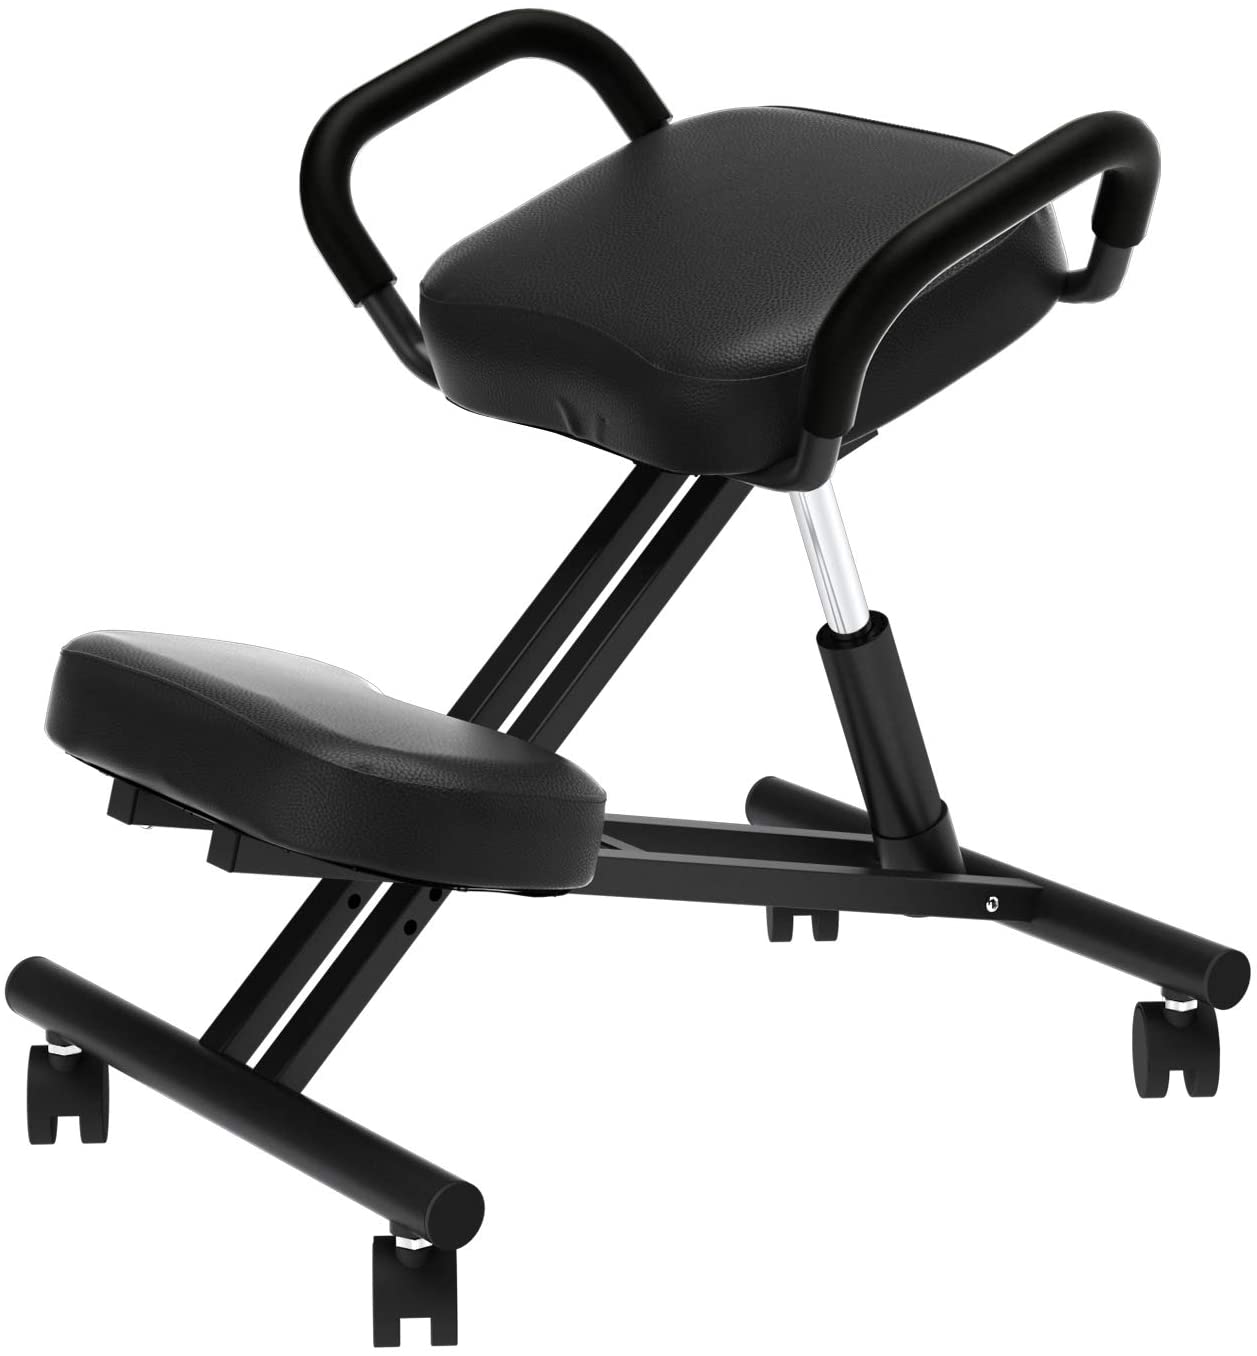 Adjustable Metal Kneeling Chair with Handles